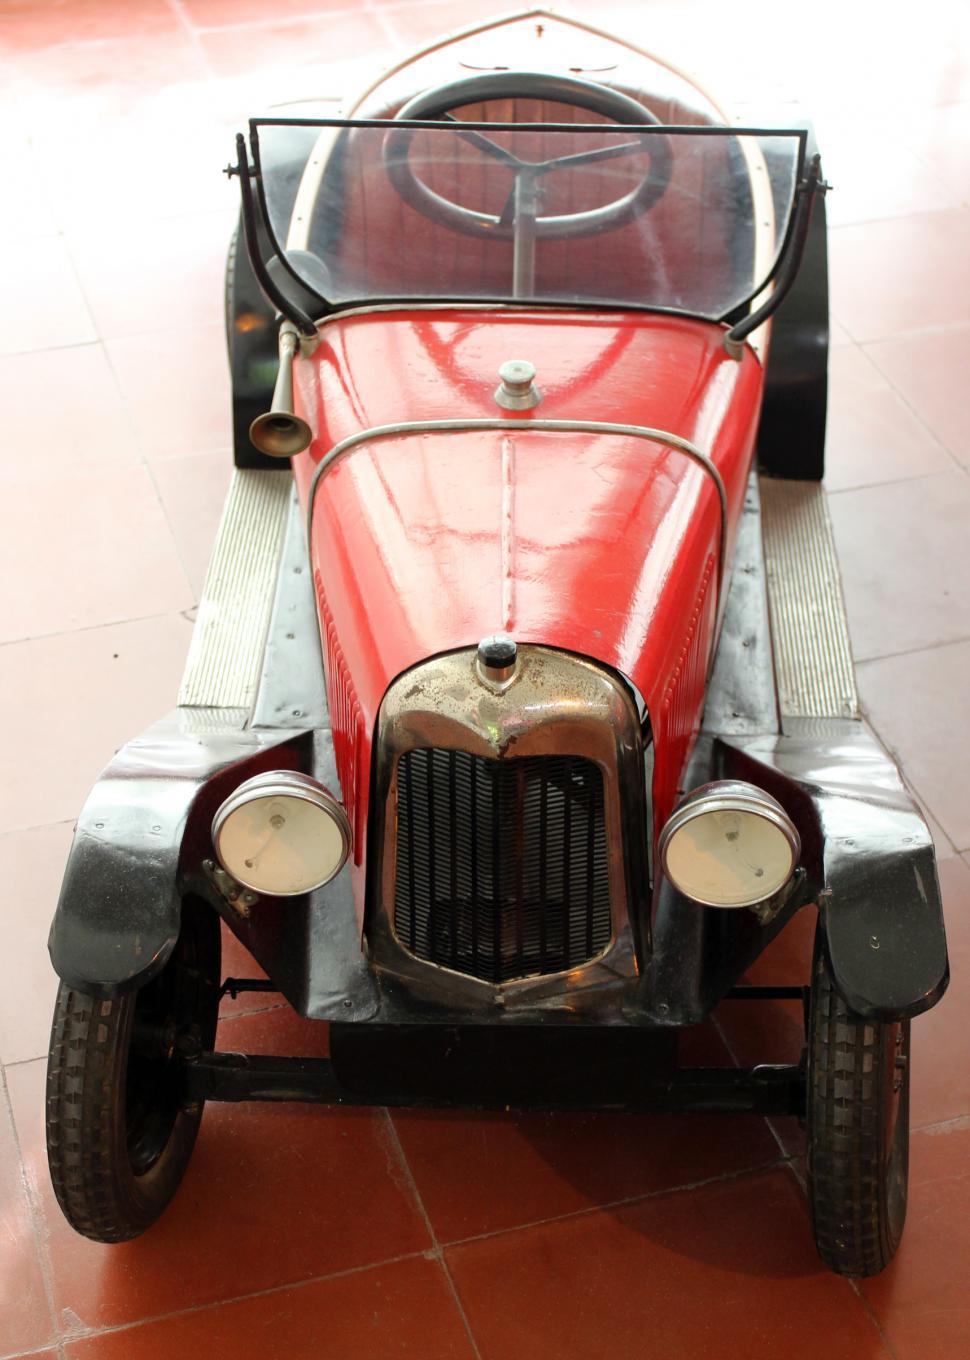 Free Image of Vintage Toys - Antique Sports Car 